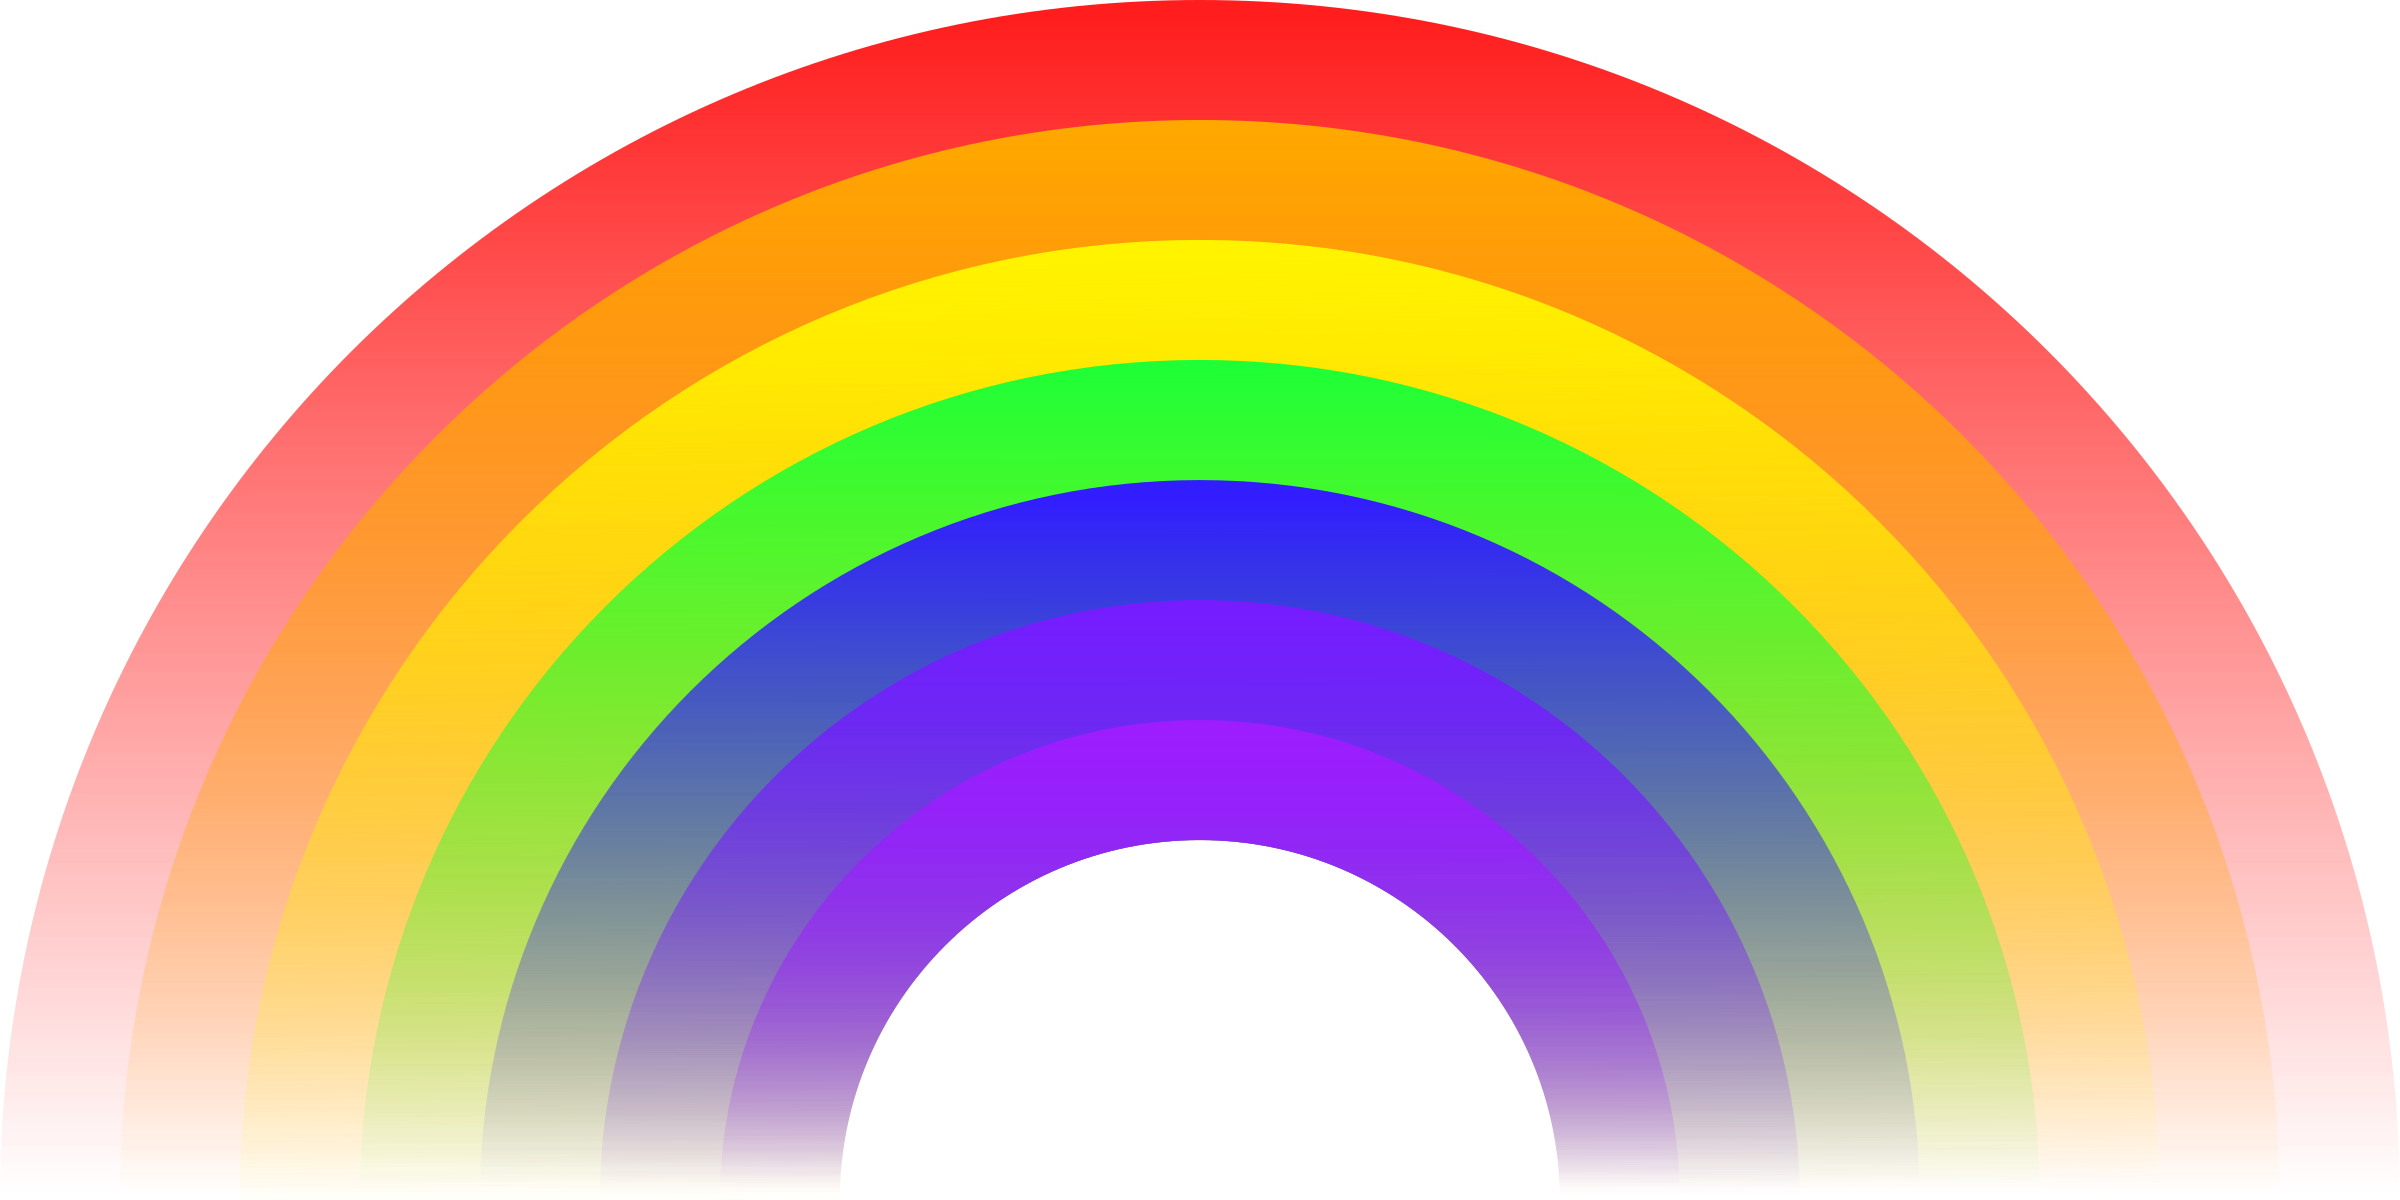 Rainbow Vector Clipart image - Free stock photo - Public Domain photo ...